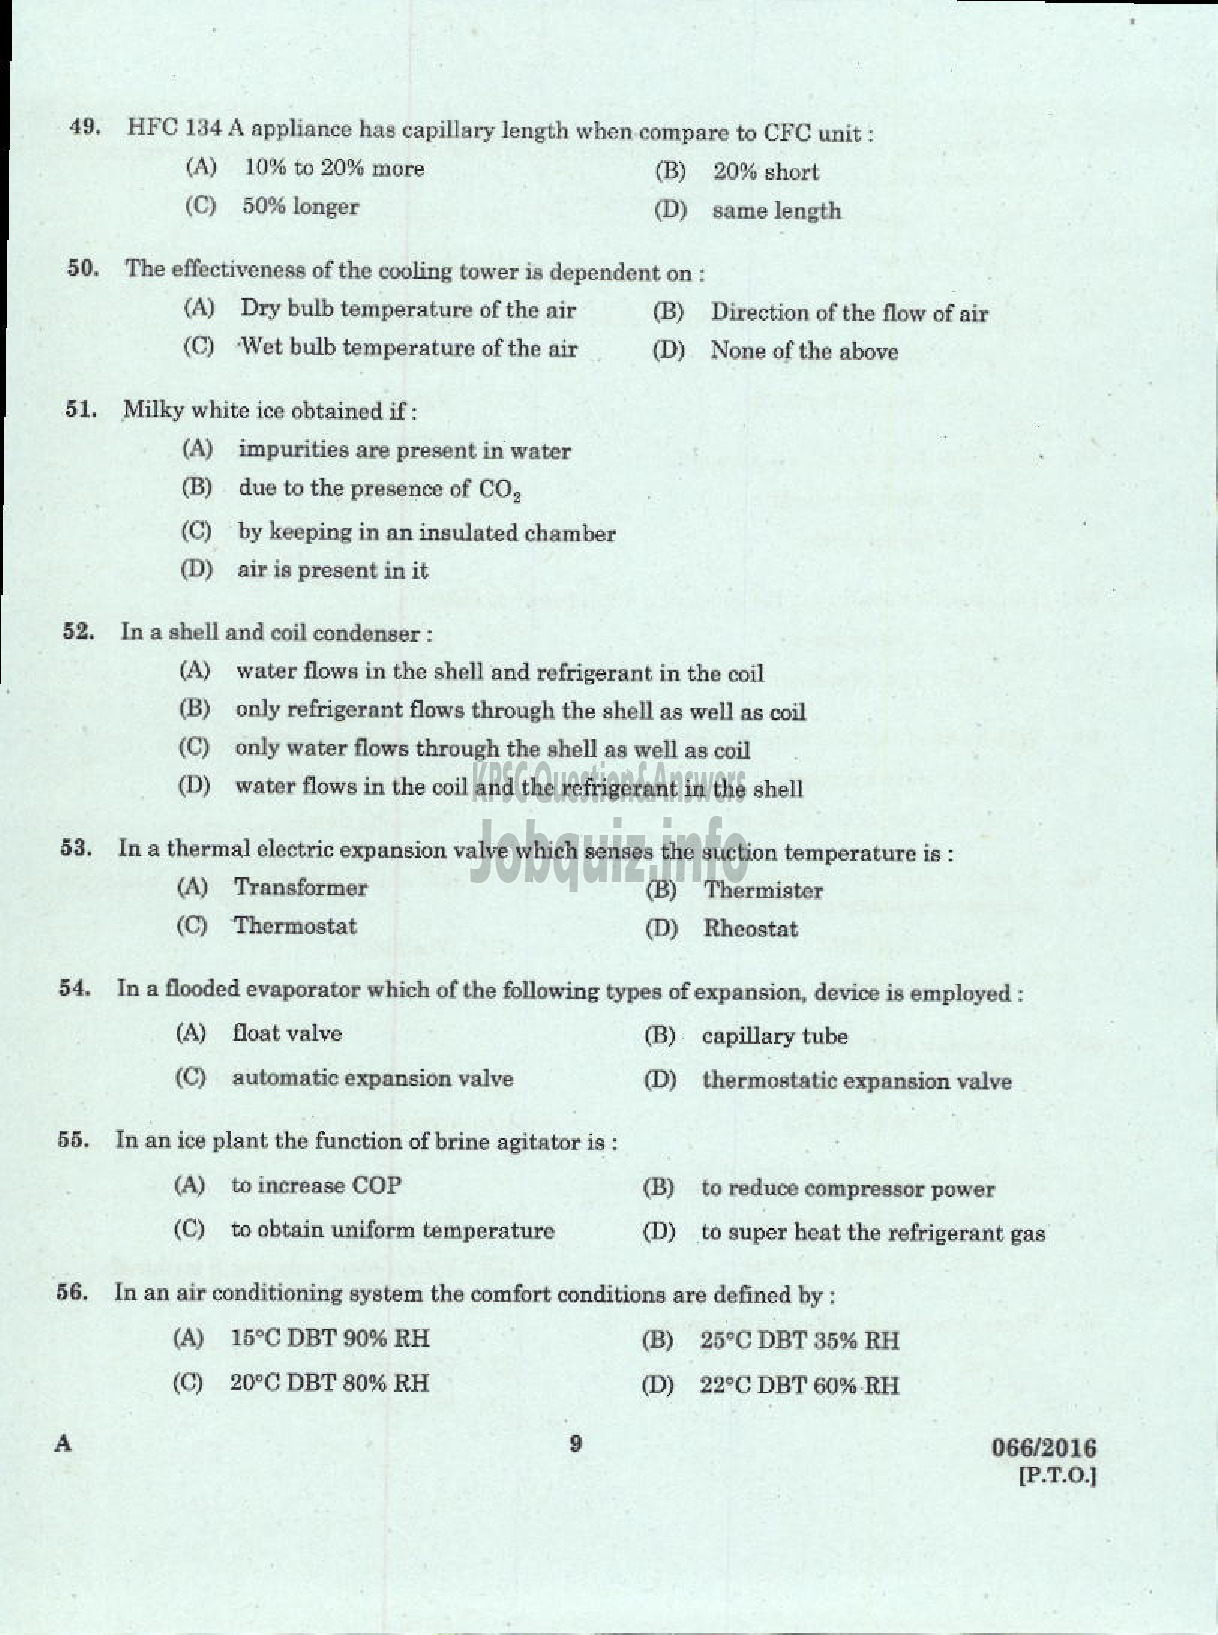 Kerala PSC Question Paper - REFRIGERATION MECHANIC UIP HEALTH SERVICES-7